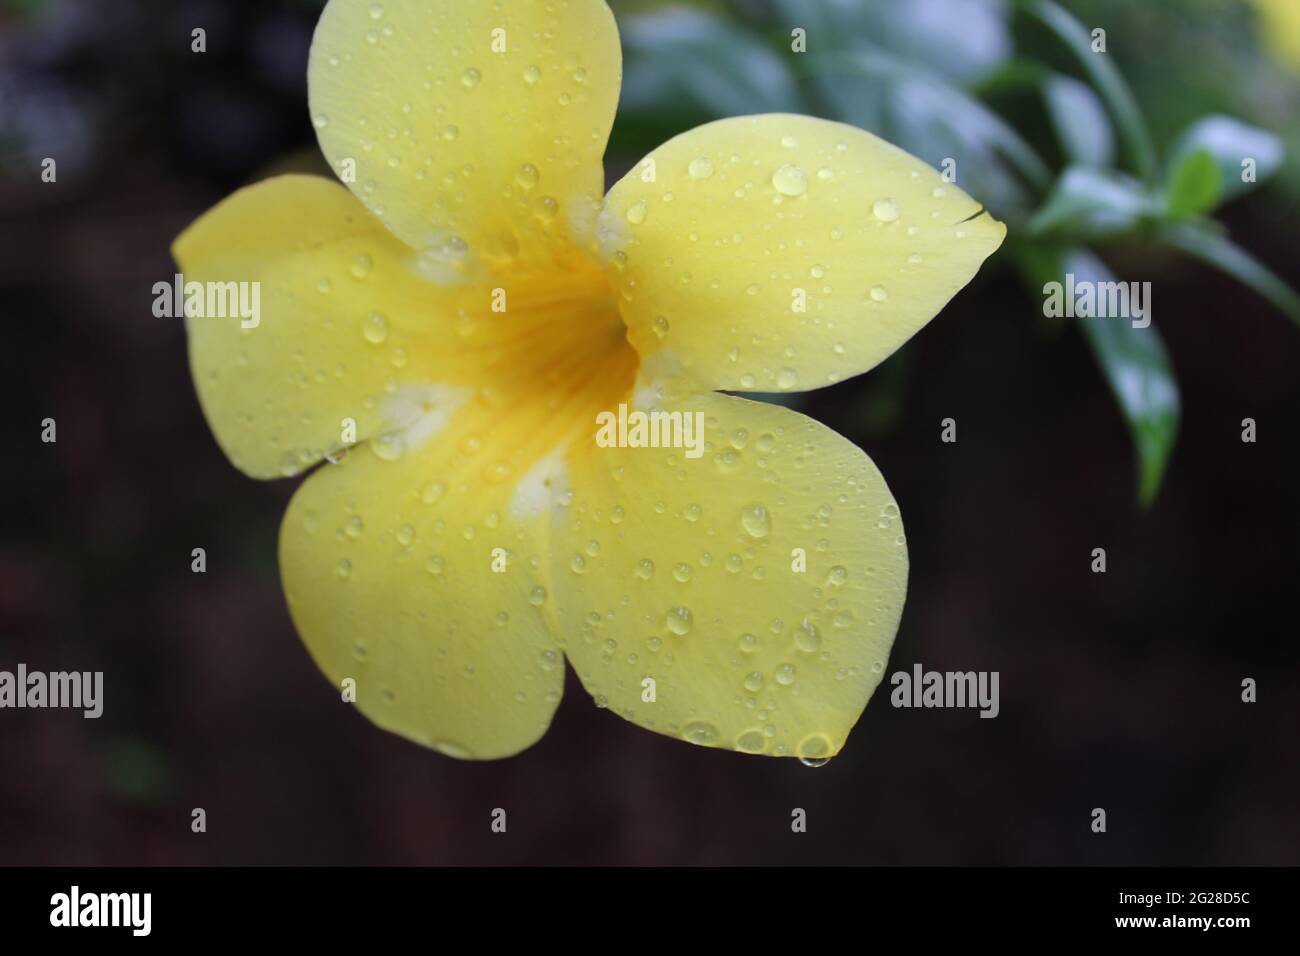 Schöne offene gelbe Blume: Goldtrompete (Apocynaceae) Allamanda cathartica L. Stockfoto